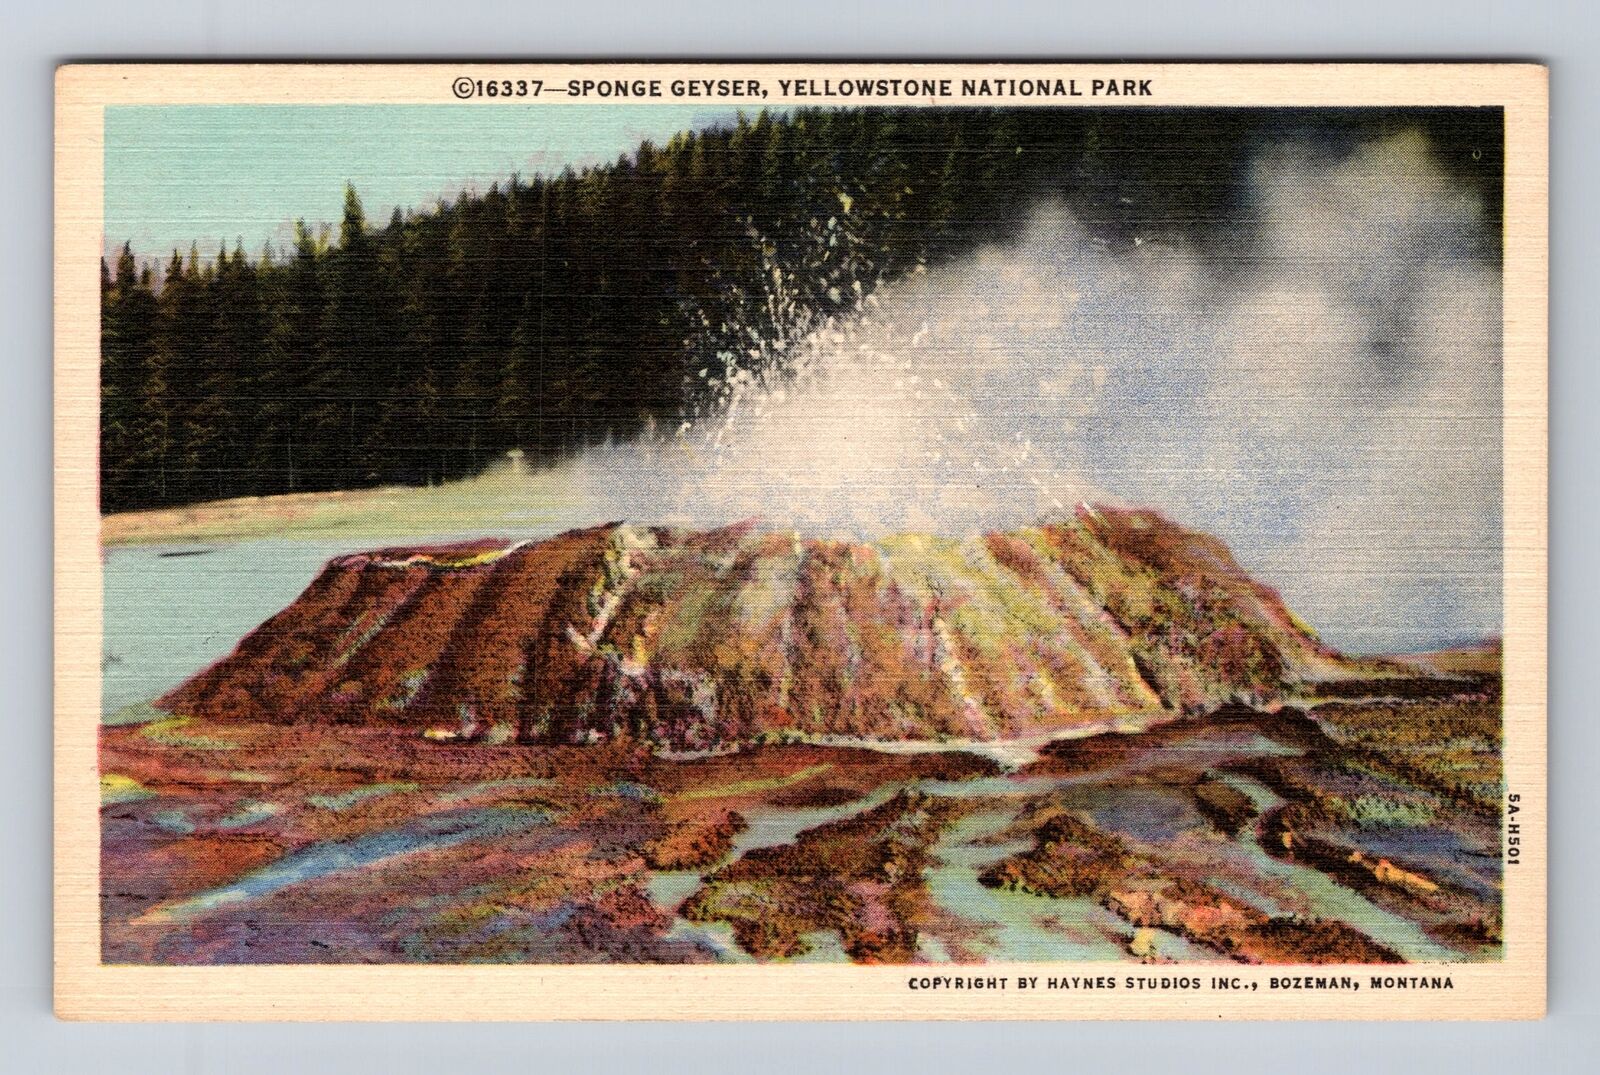 Yellowstone National Park, Sponge Geyser, Series #16337, Vintage Postcard